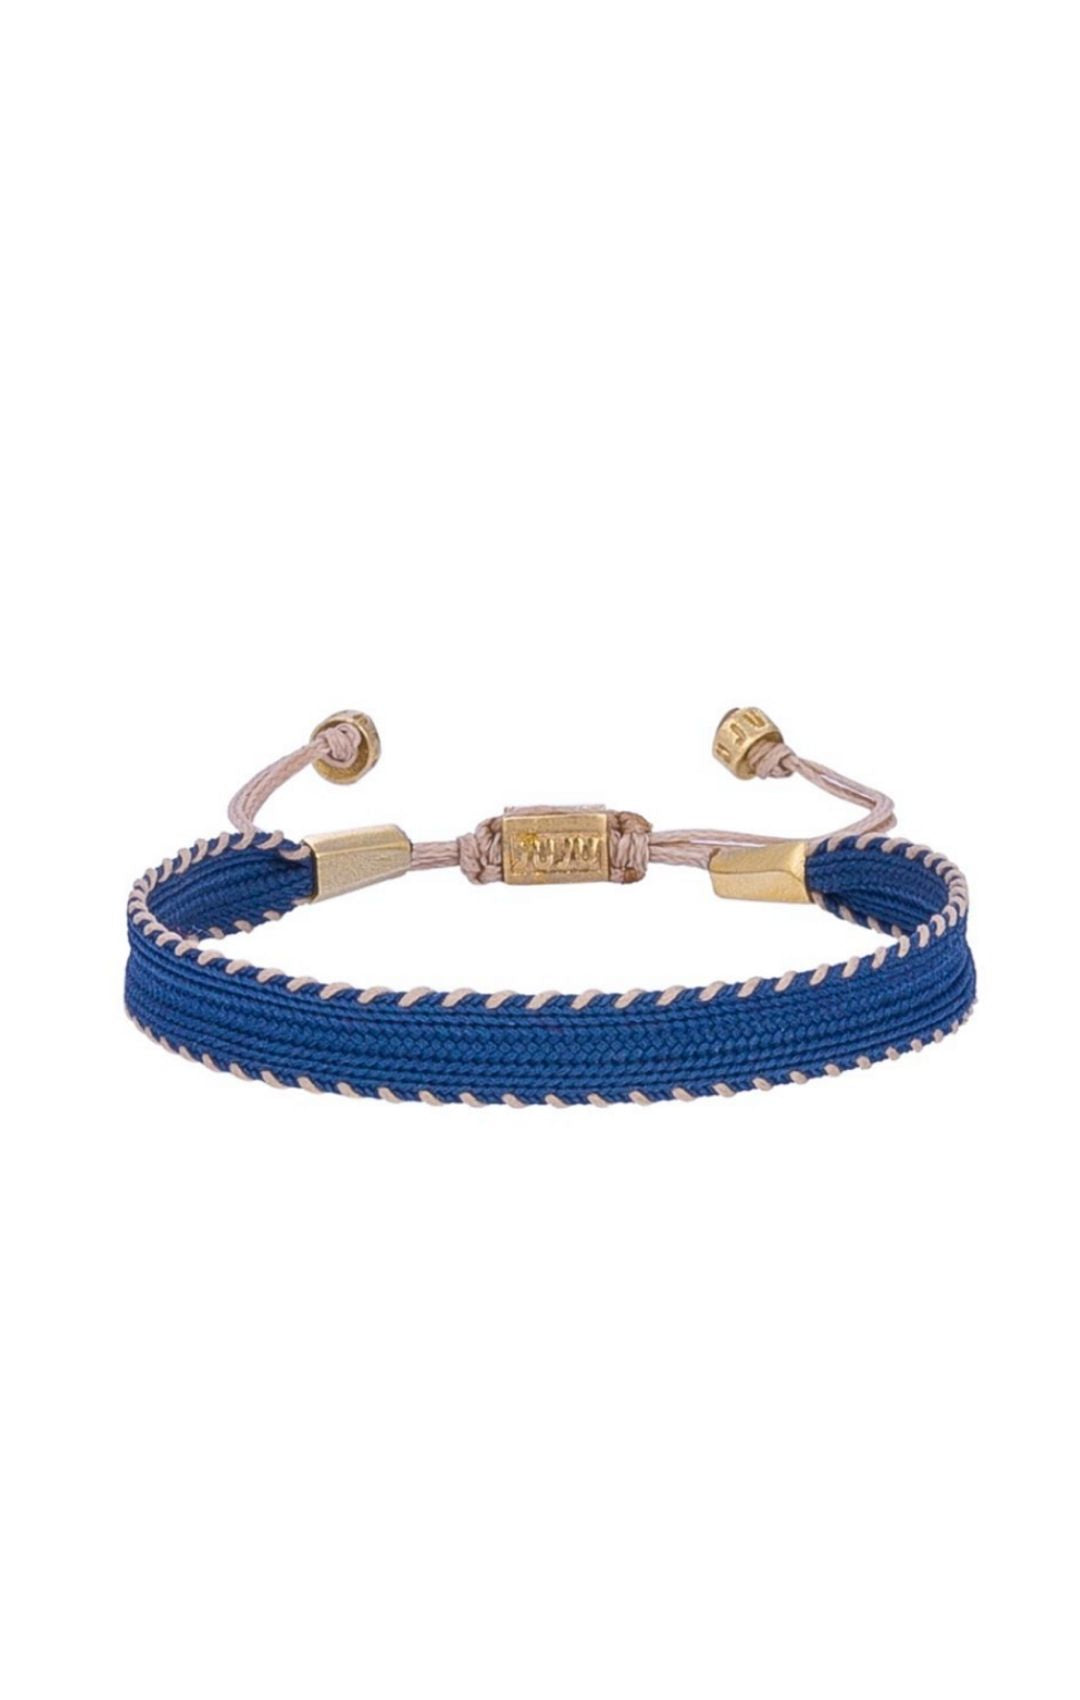 Coloured rope Bracelet